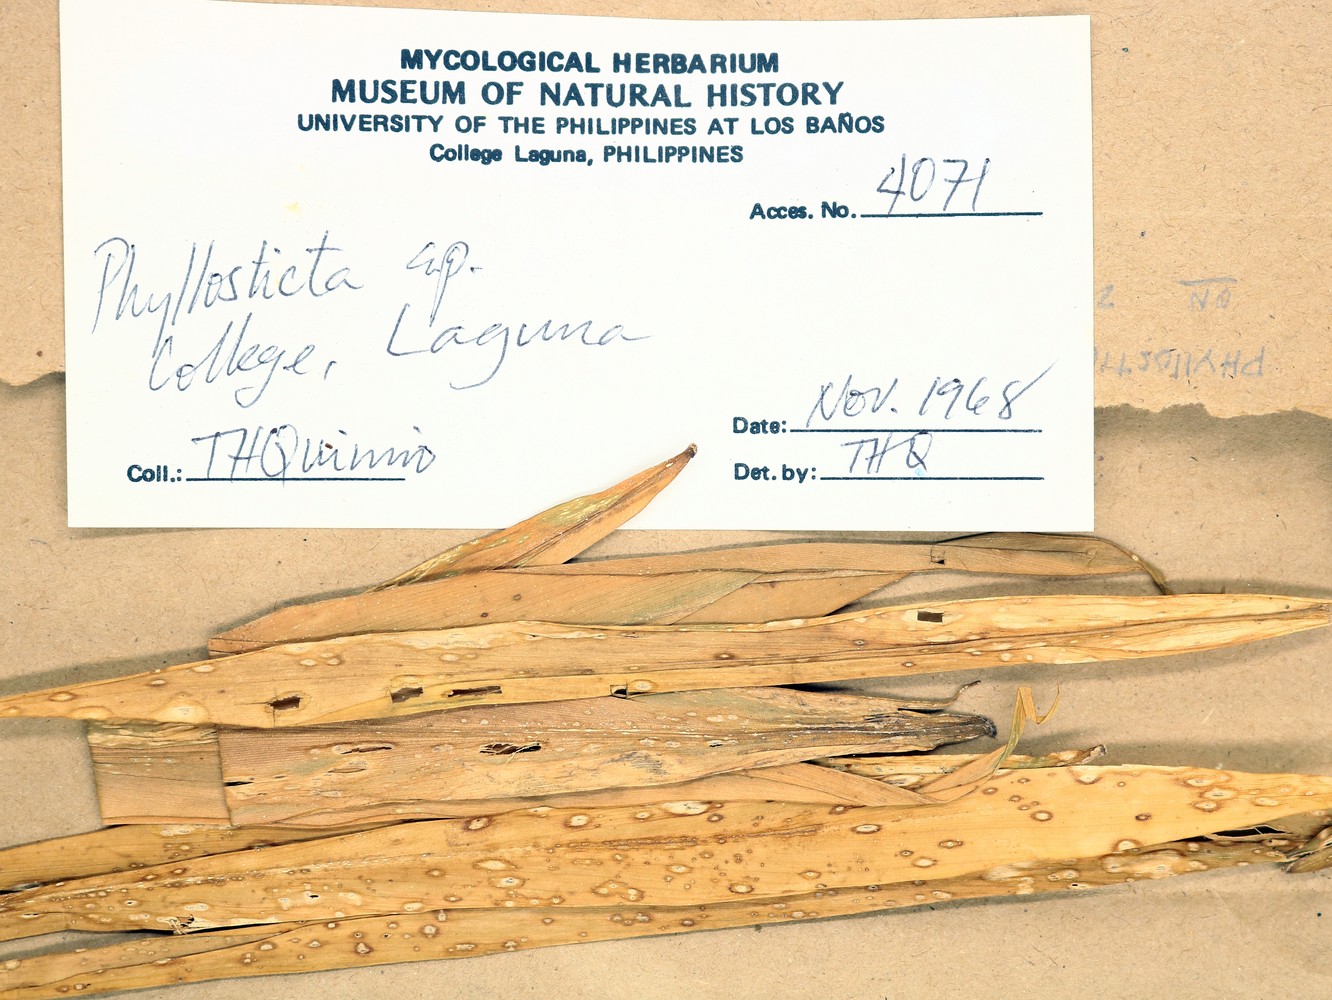 MNH-mycological-herbarium-06